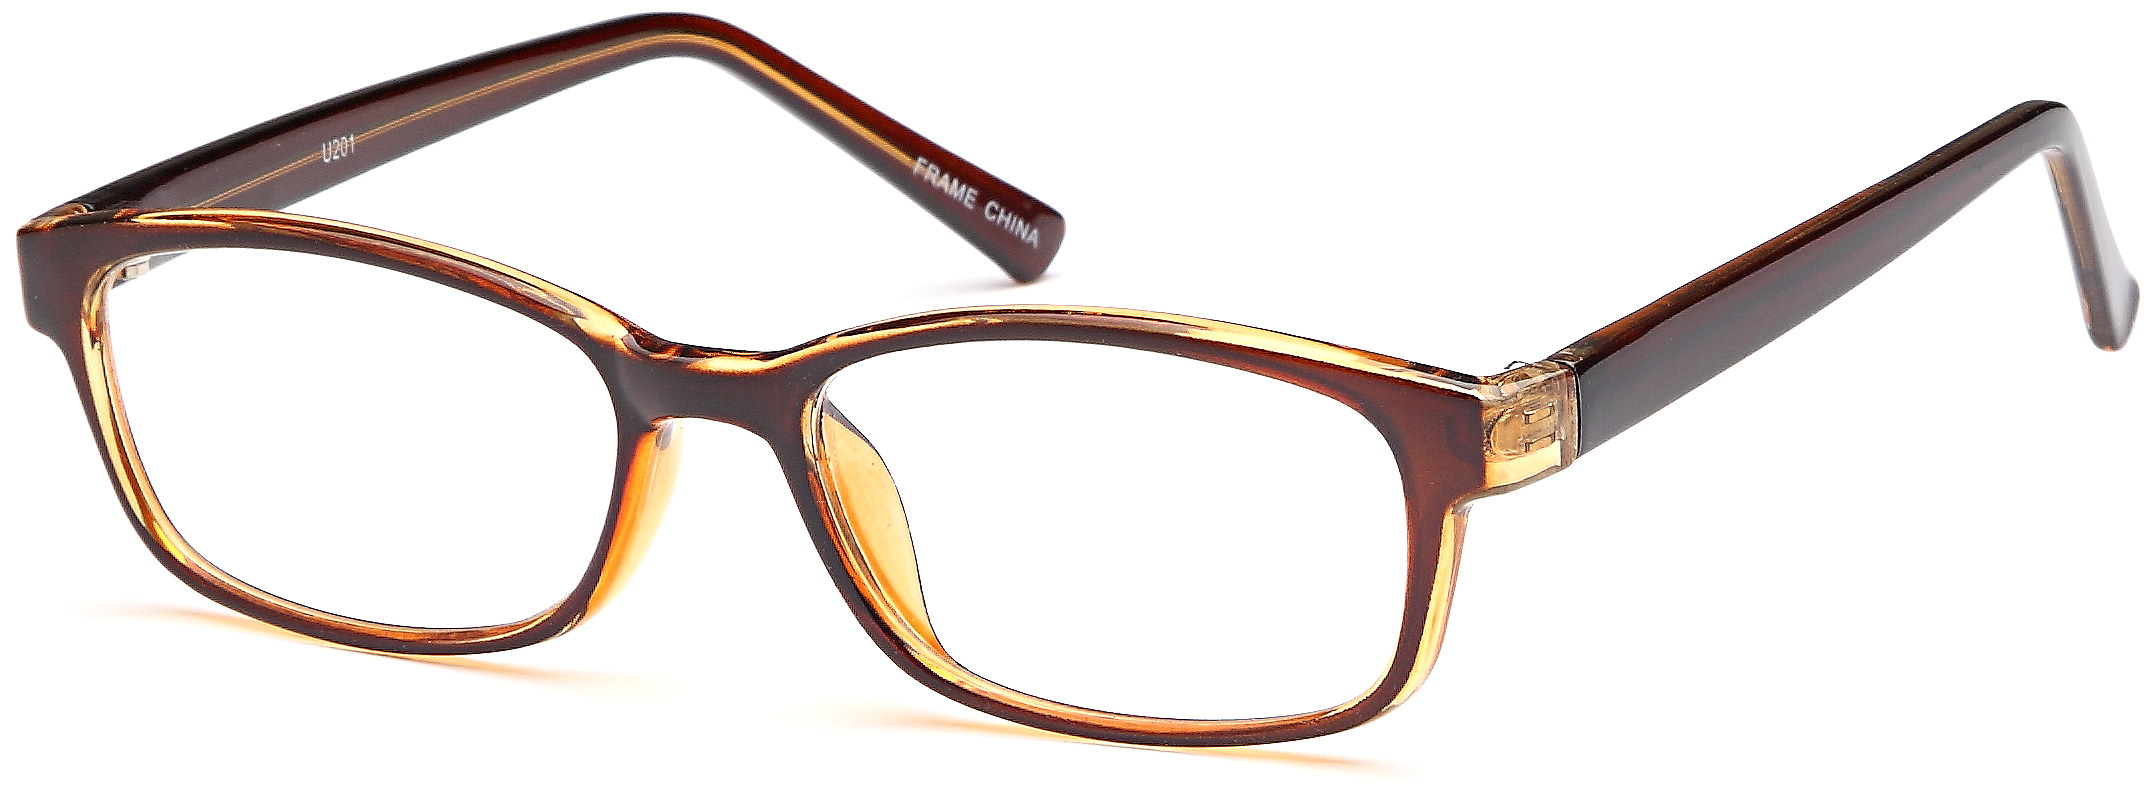 U 201 – Capri Optics – Custom Designers Eyewear Distributor & Manufacturer